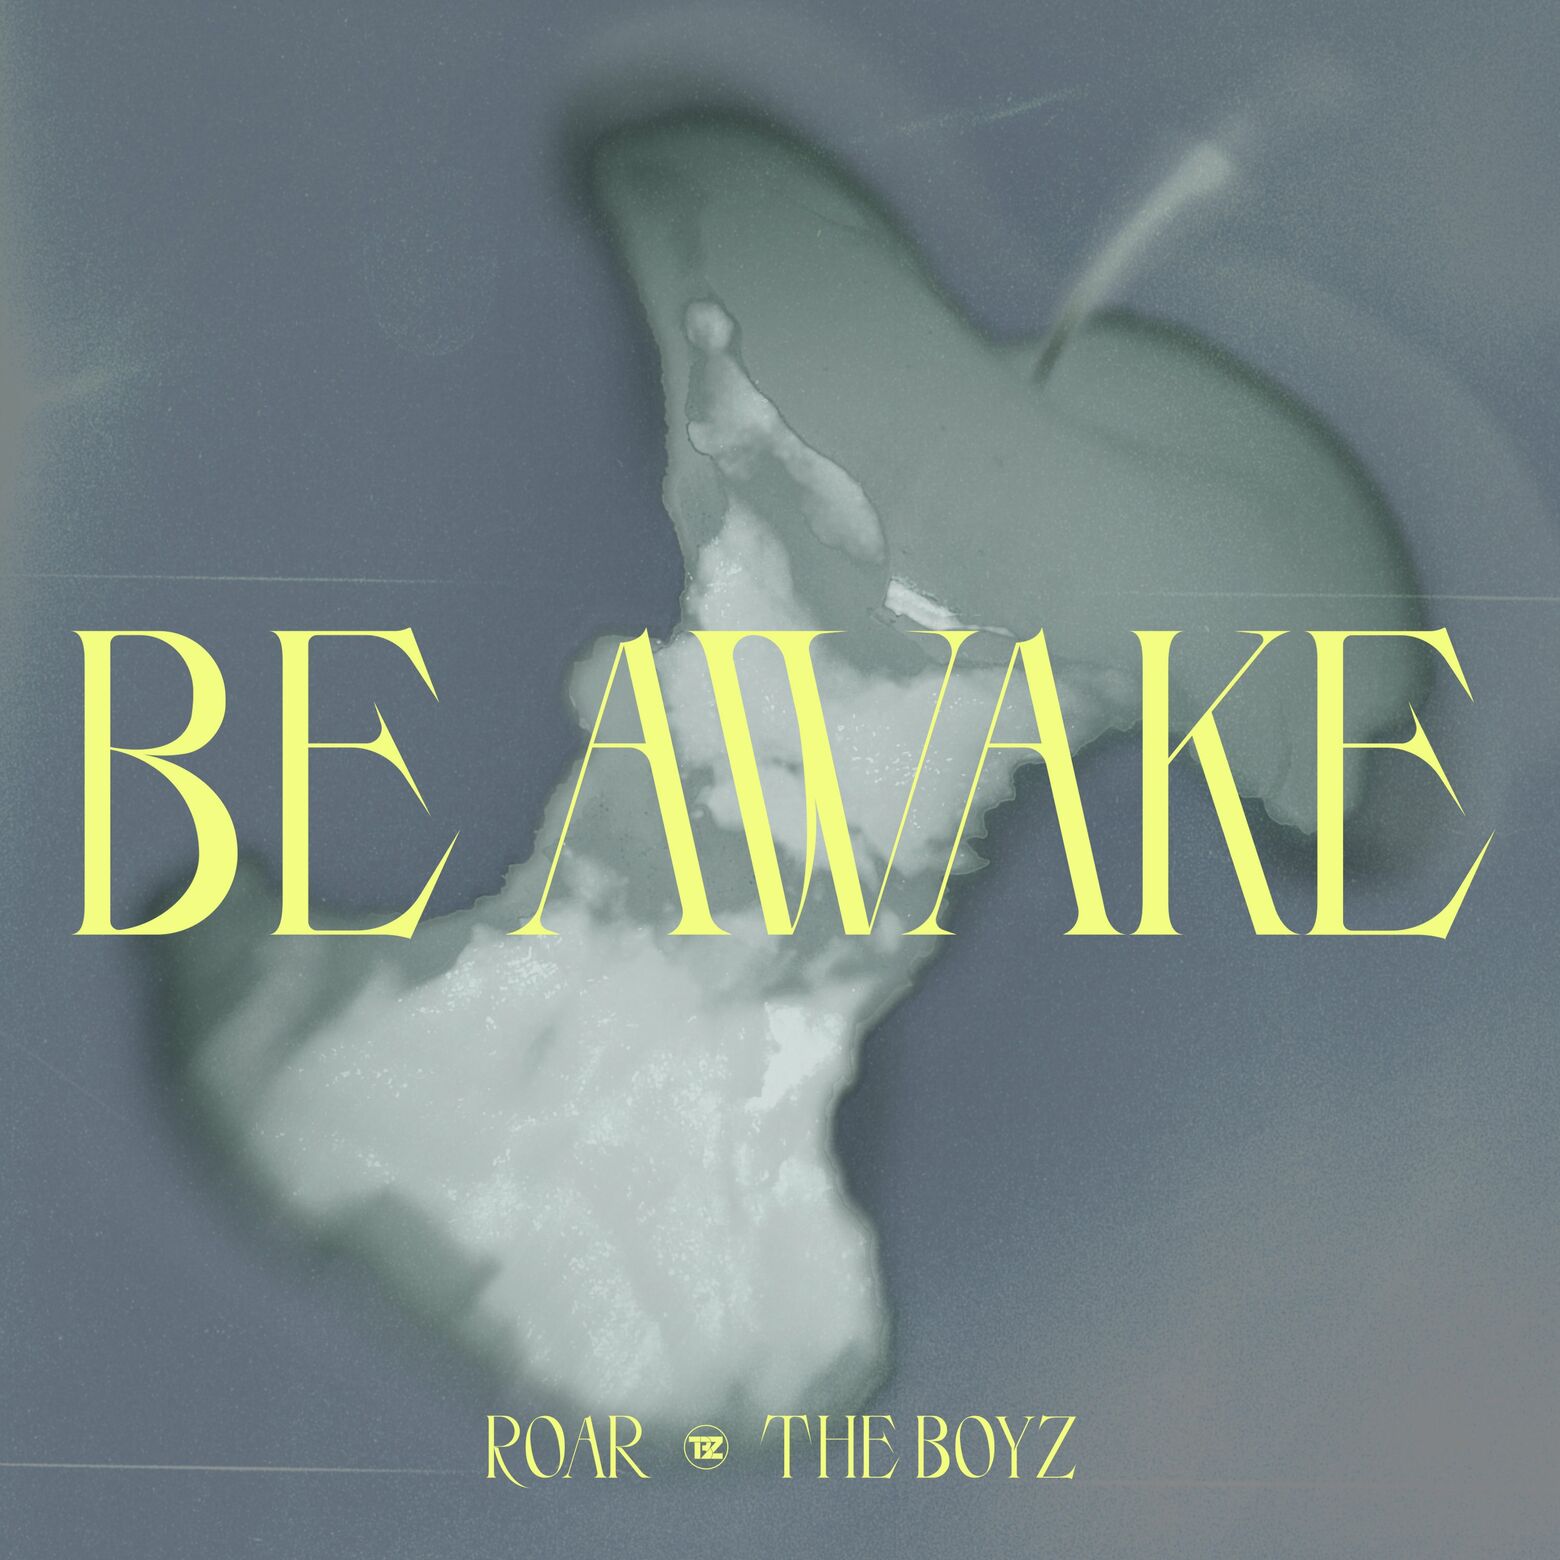 THE BOYZ – THE BOYZ 8th MINI ALBUM [BE AWAKE]